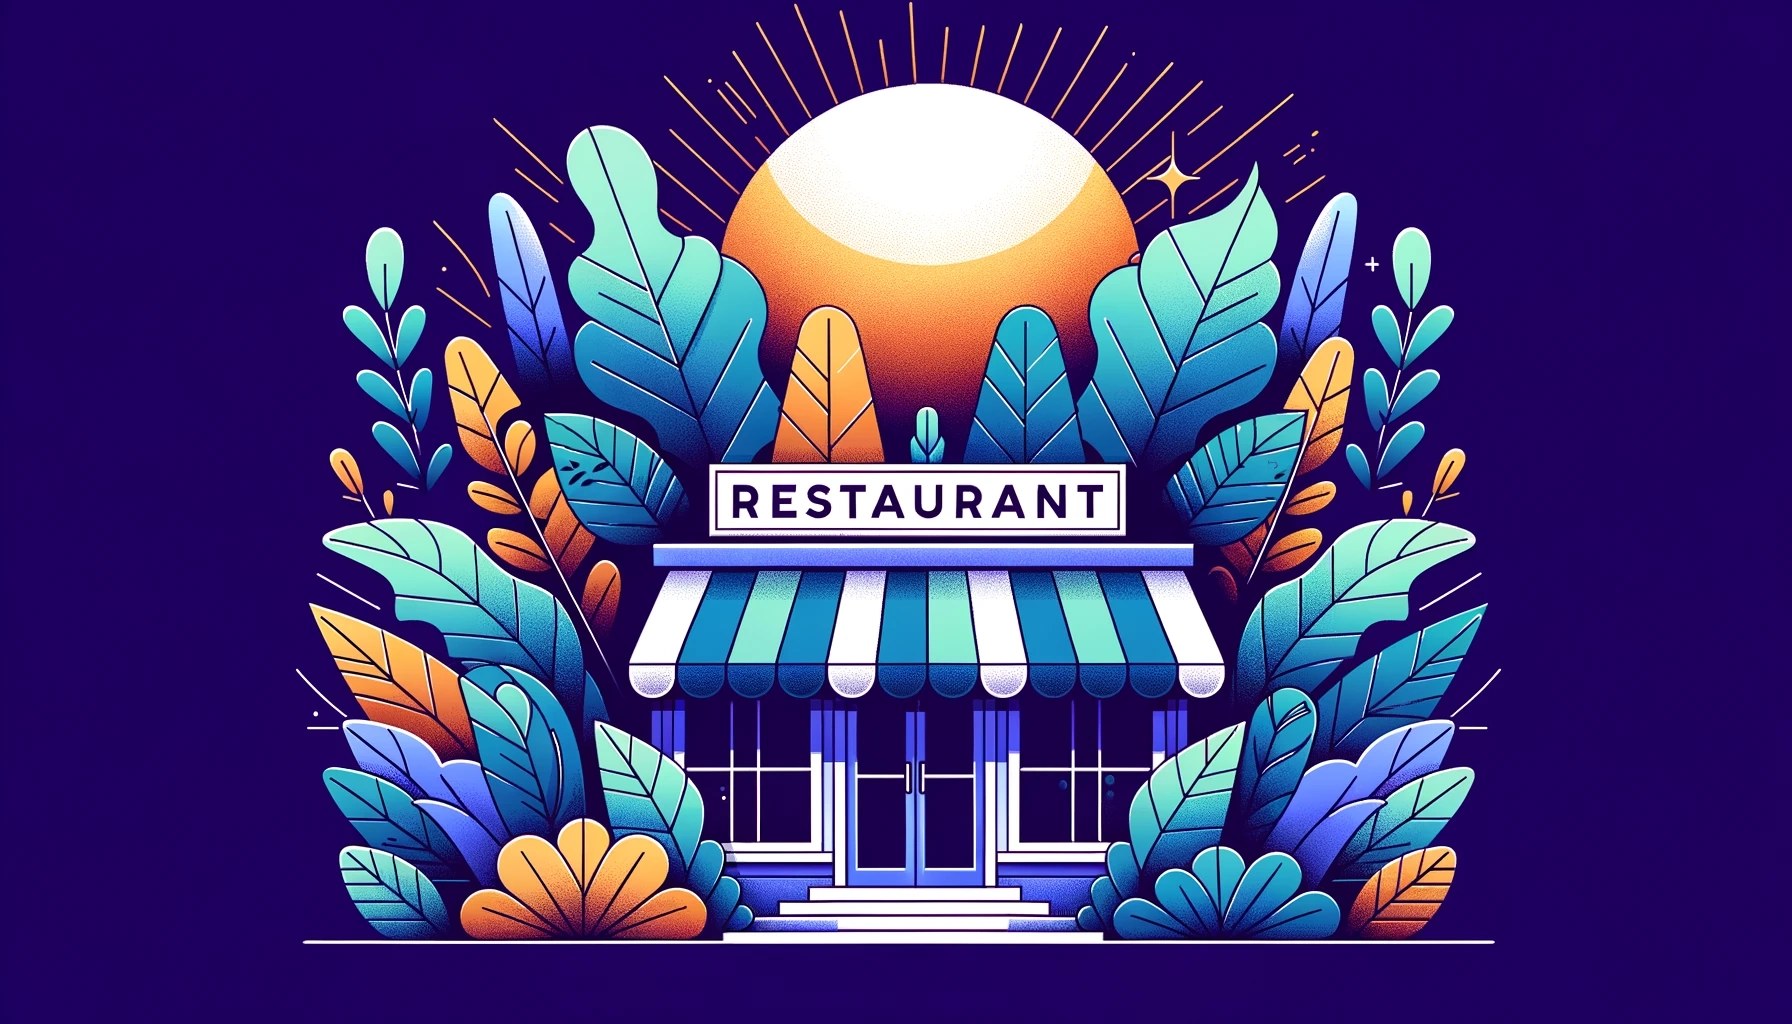 website builders for restaurants cover - restaurant illustration with colorful plants